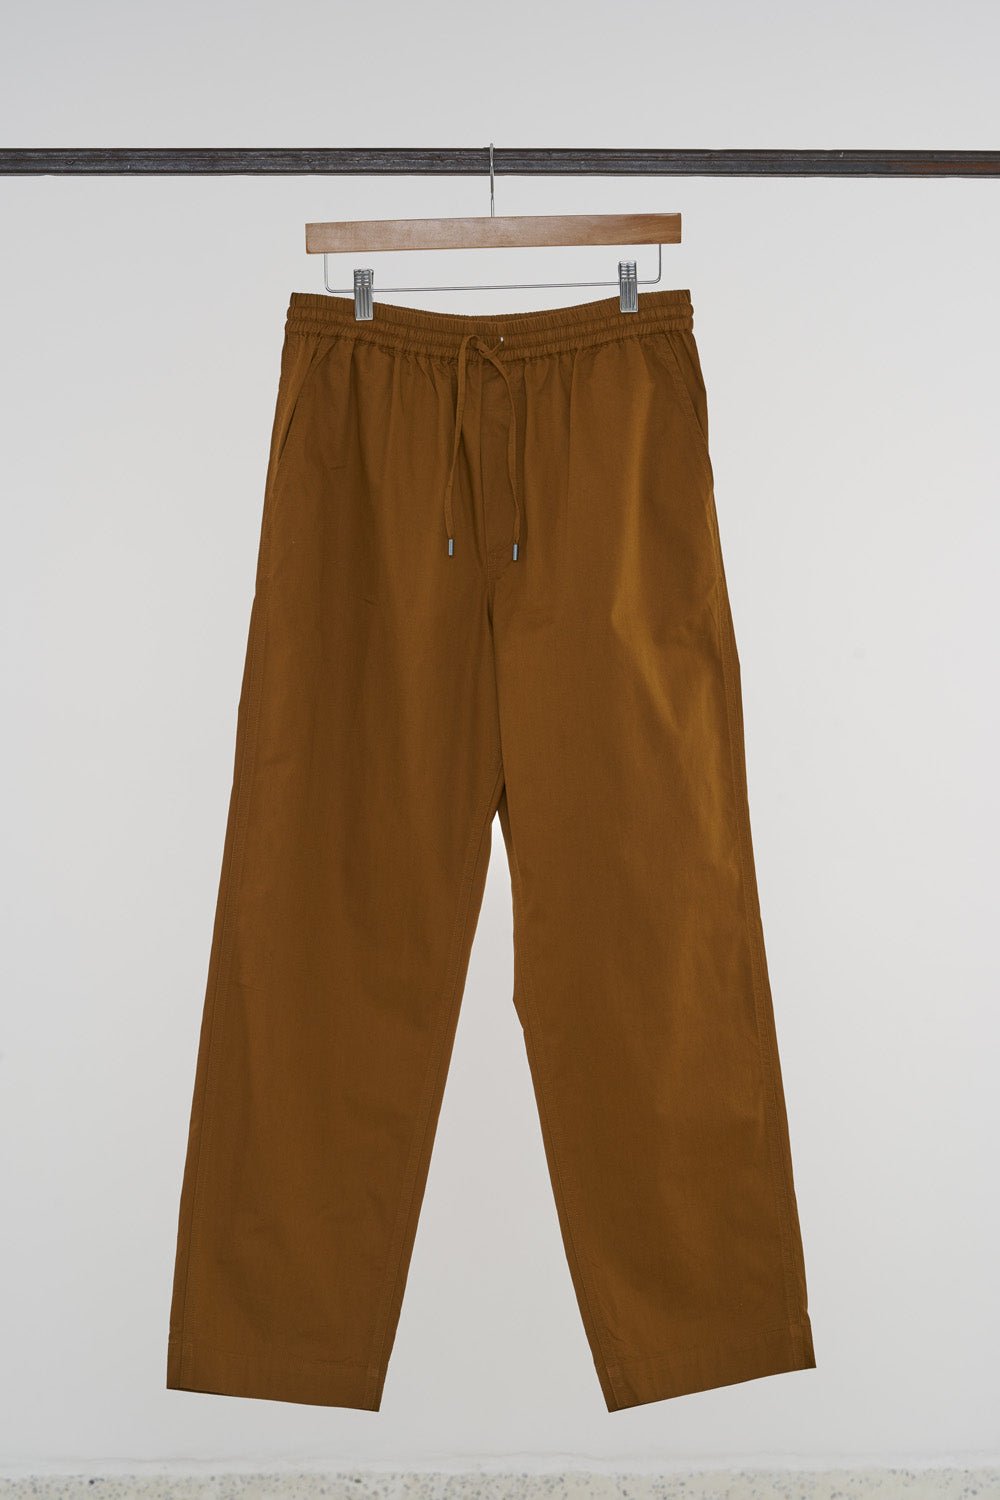 Ochre ITOH 100% Cotton Twill Drawstring Pants, Contemporary Menswear